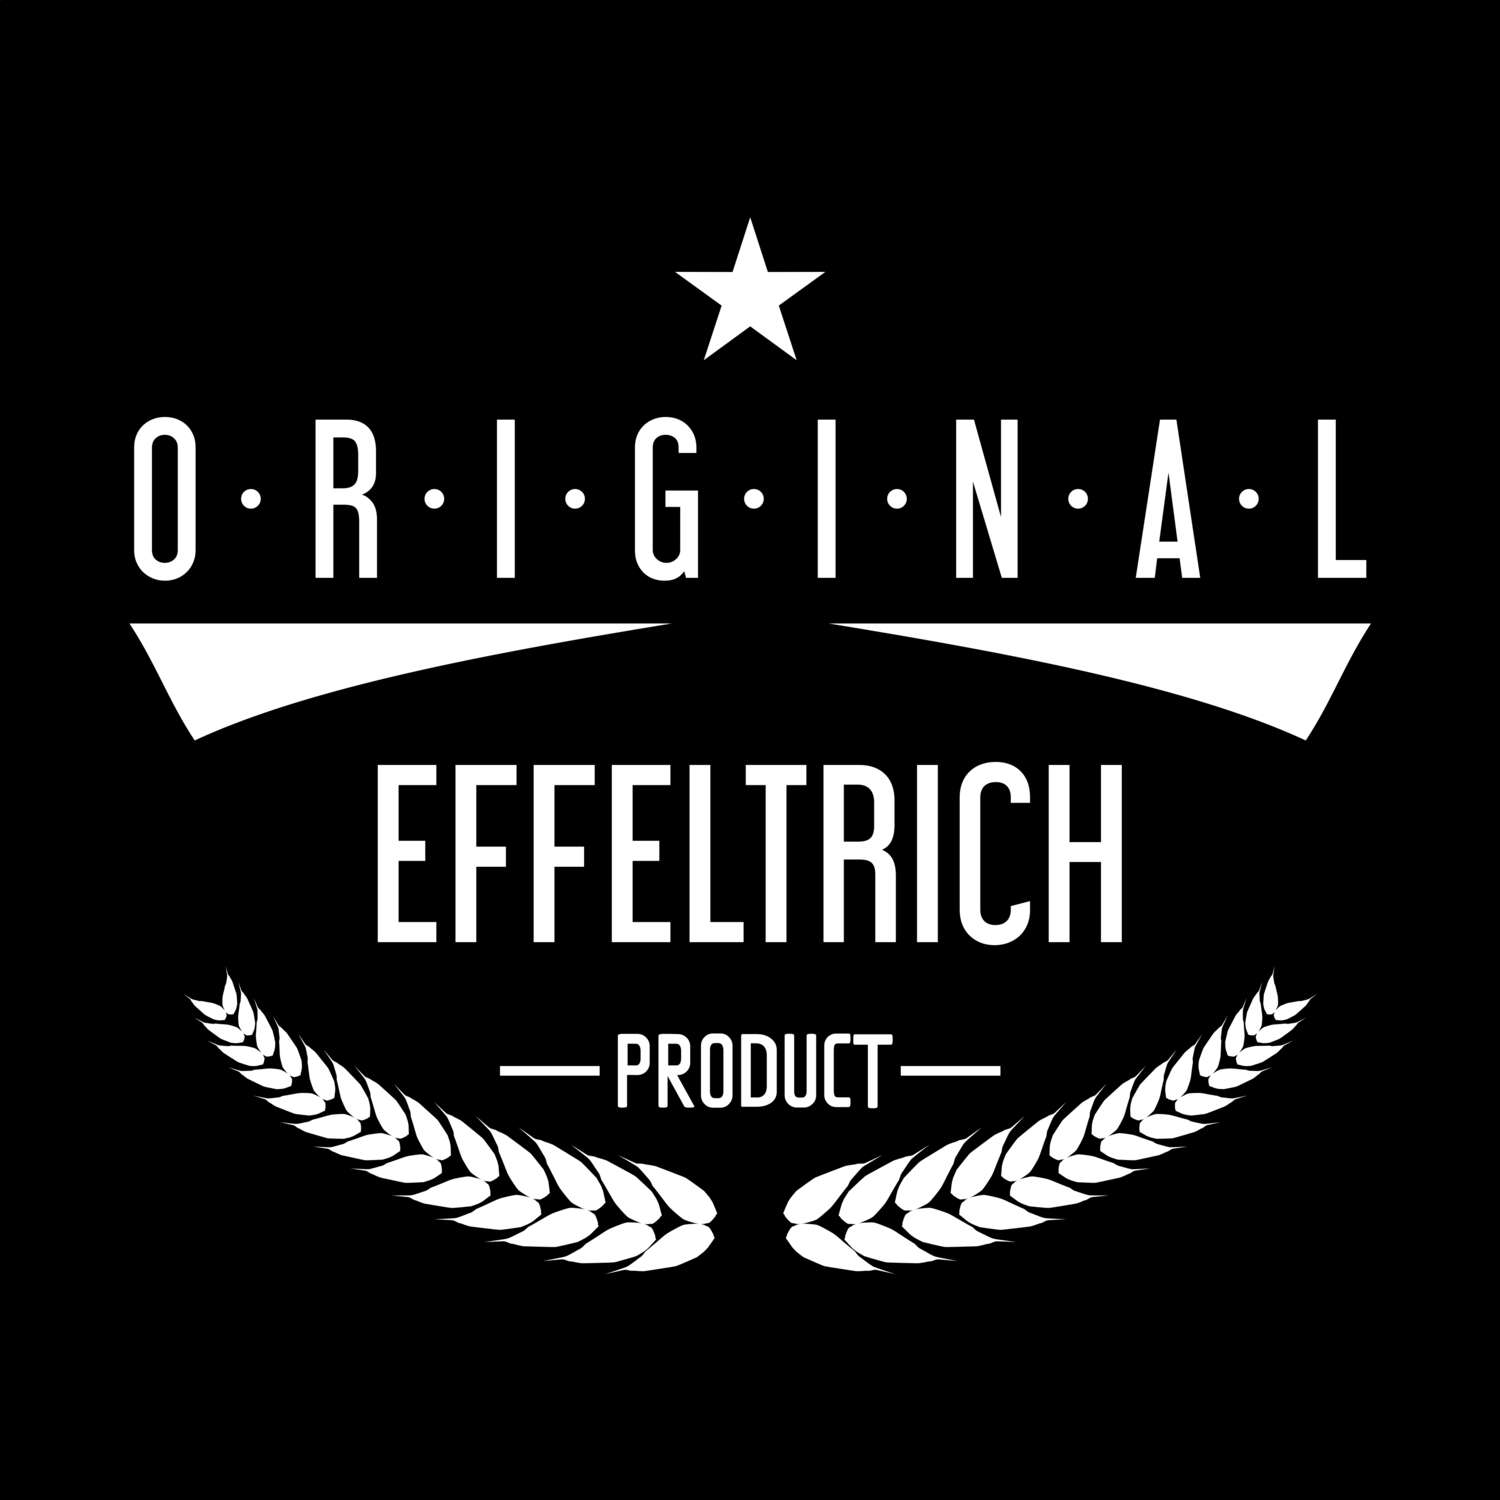 Effeltrich T-Shirt »Original Product«